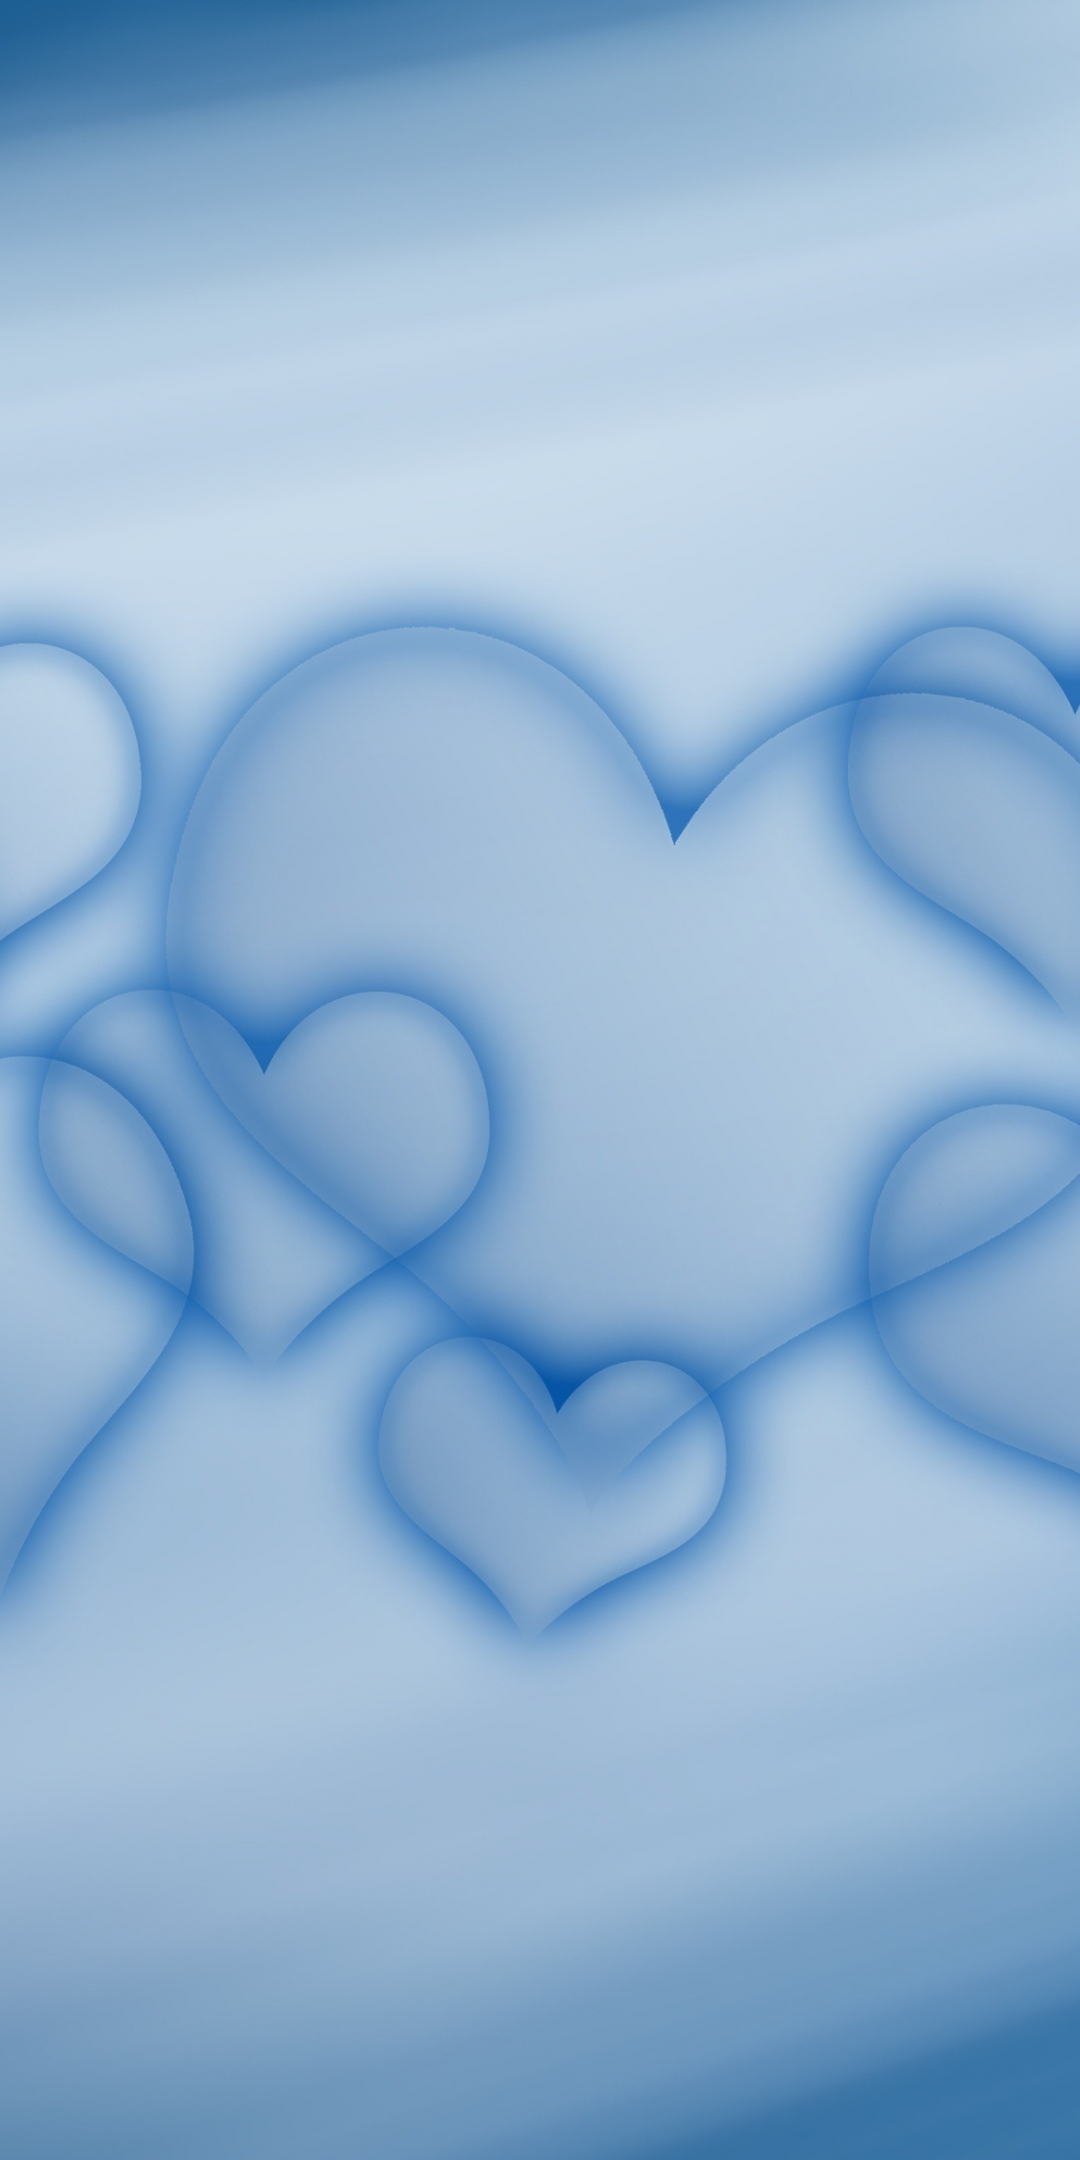 Blue, gradient, heart, abstract, 1080x2160 wallpaper